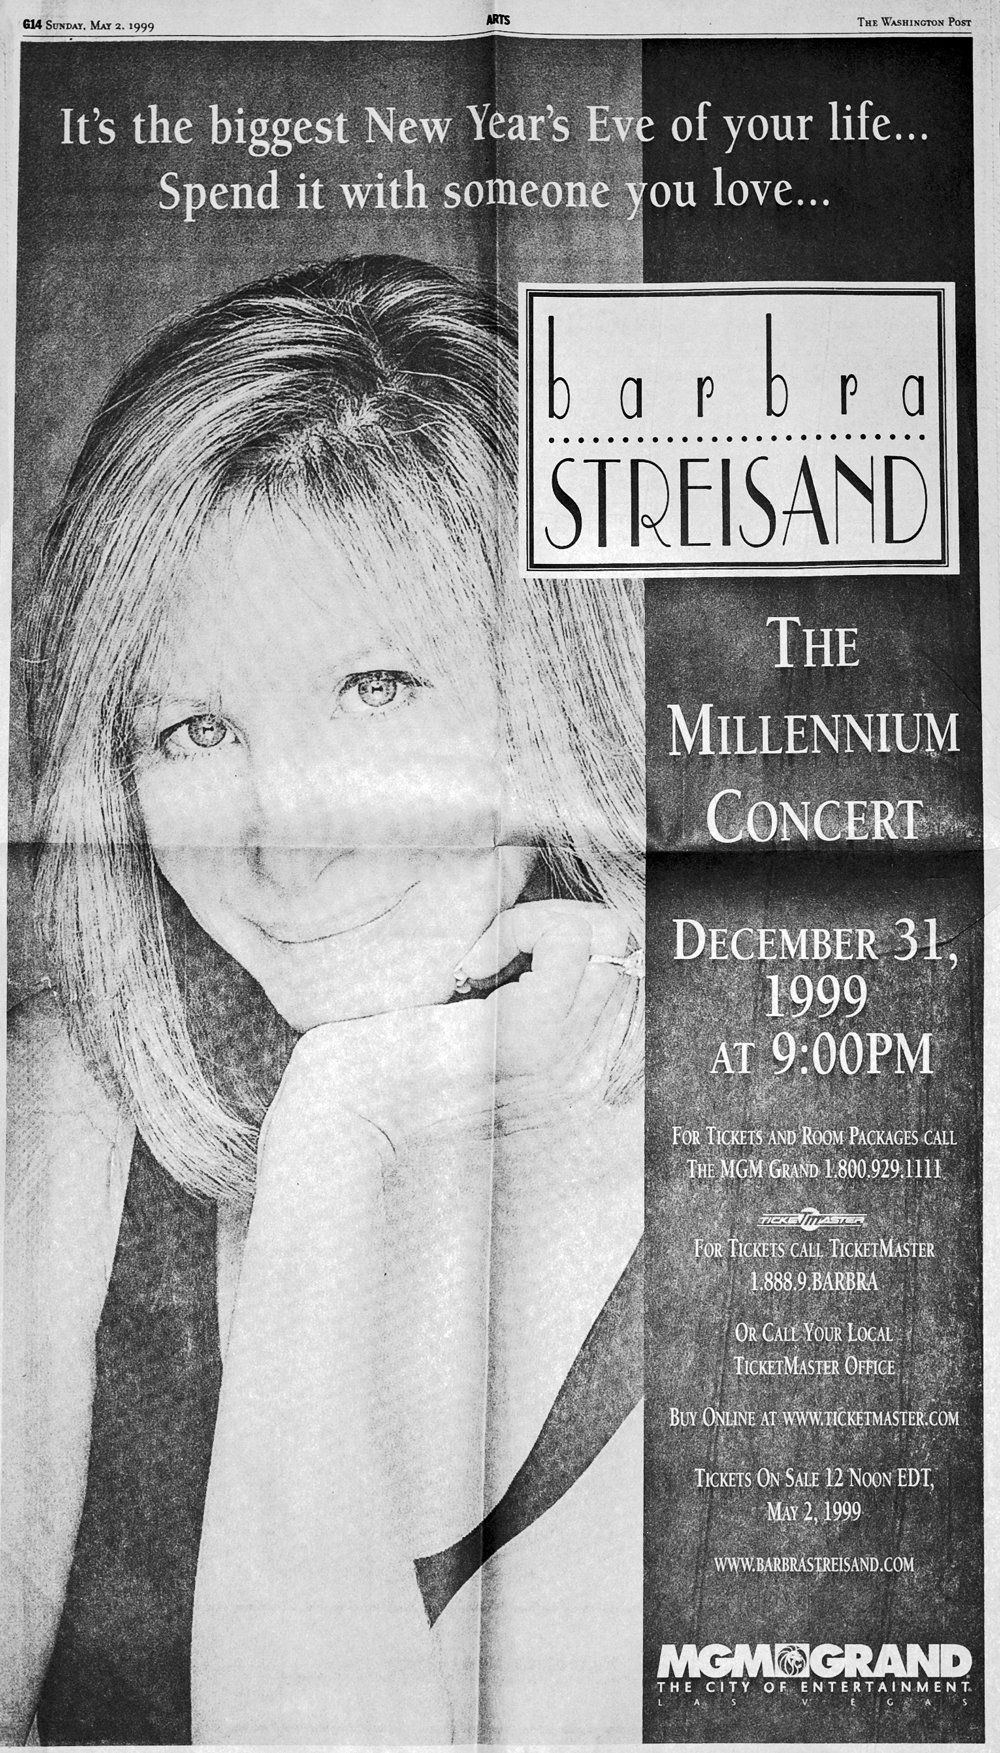 Full page newspaper ad for Barbra's December 31, 1999 concert.